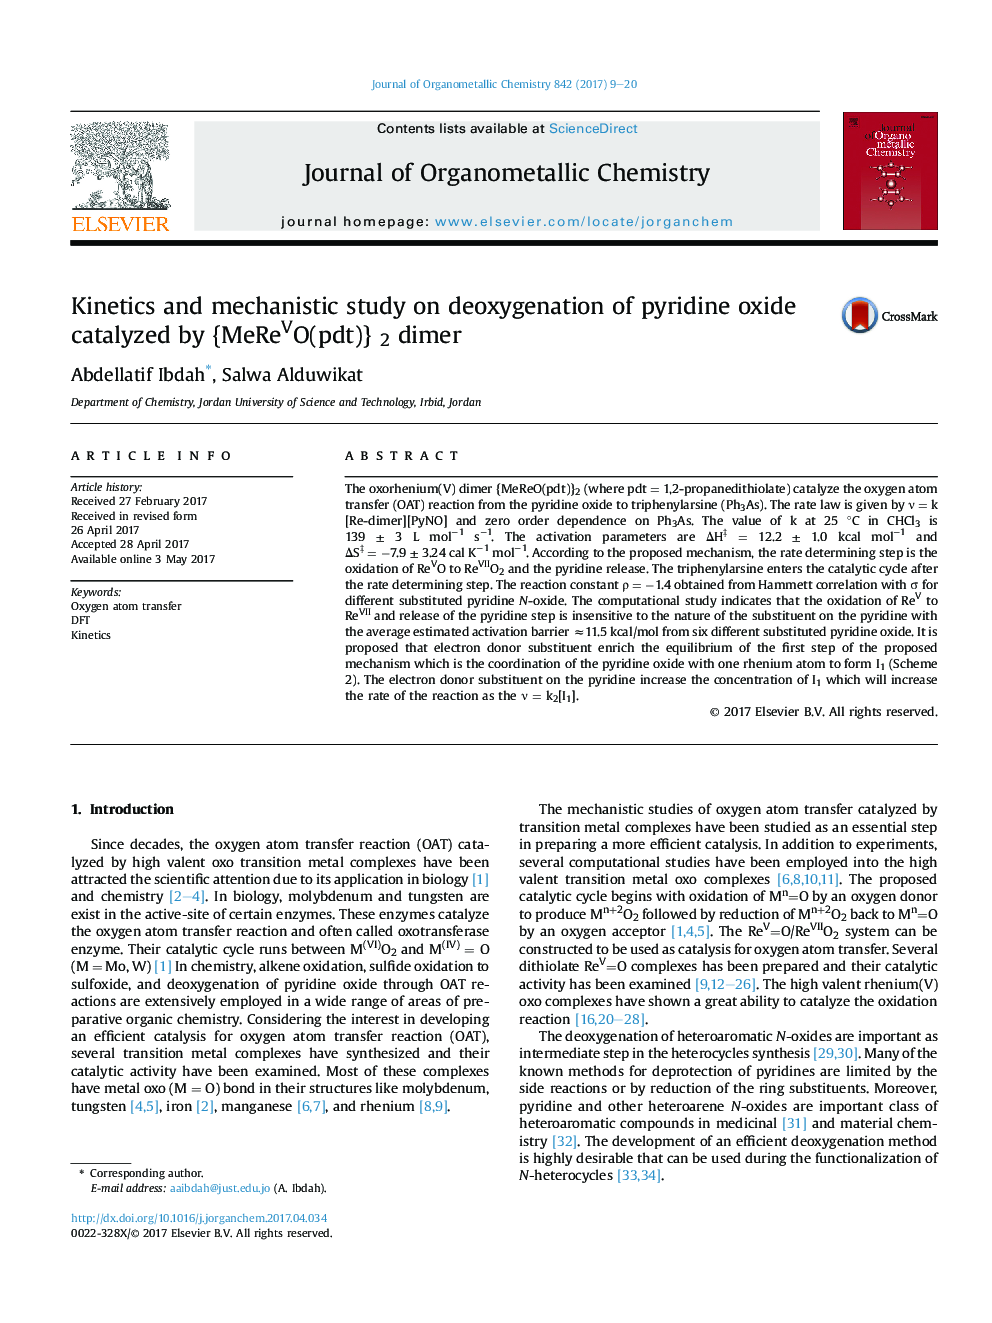 Kinetics and mechanistic study on deoxygenation of pyridine oxide catalyzed by {MeReVO(pdt)} 2 dimer